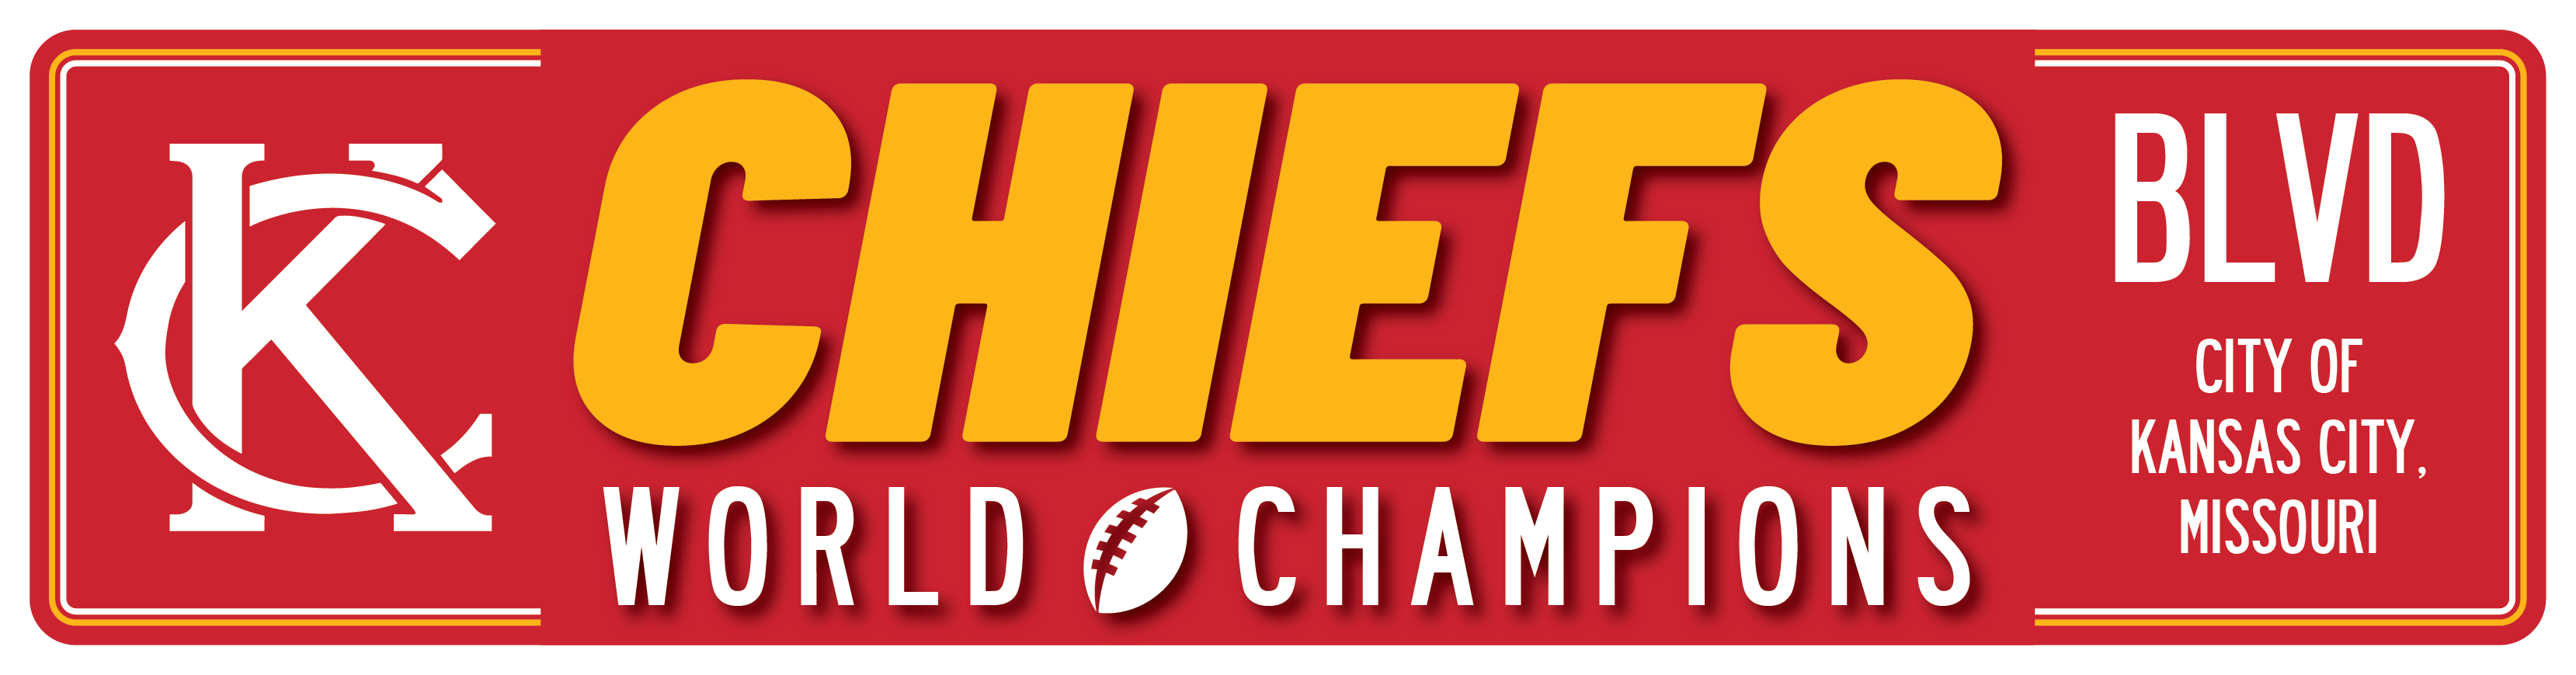 KC Chiefs World Champions Blvd - 6"x23"